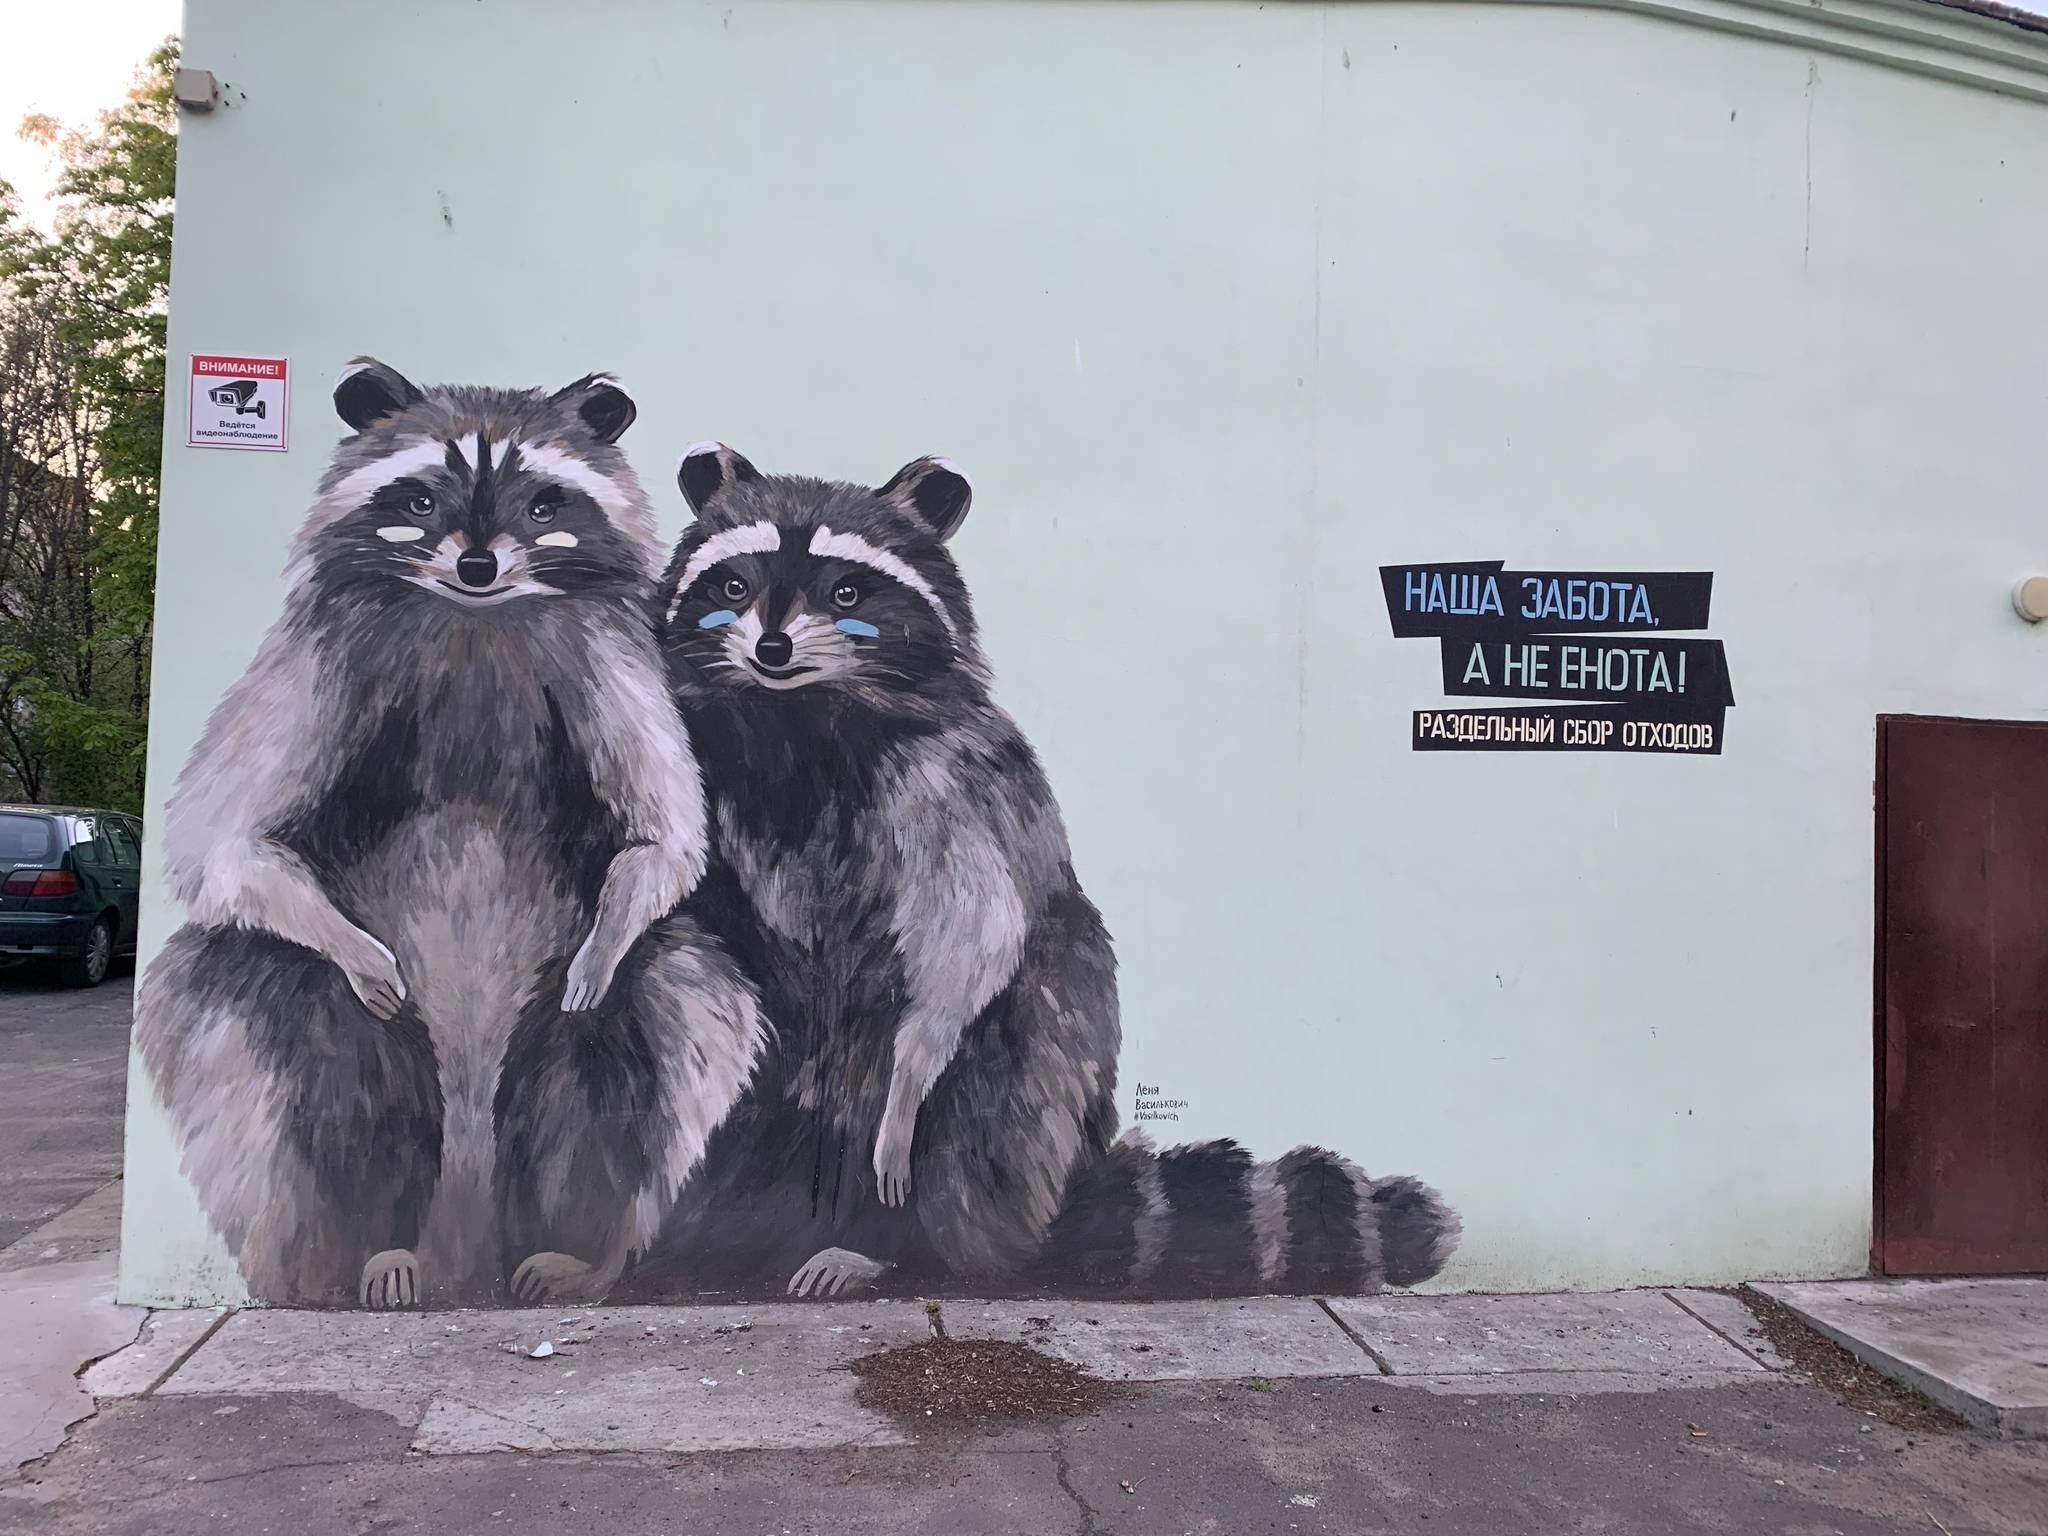 Лёня Василькович (vasiLkovich)&mdash;"Raccoons"